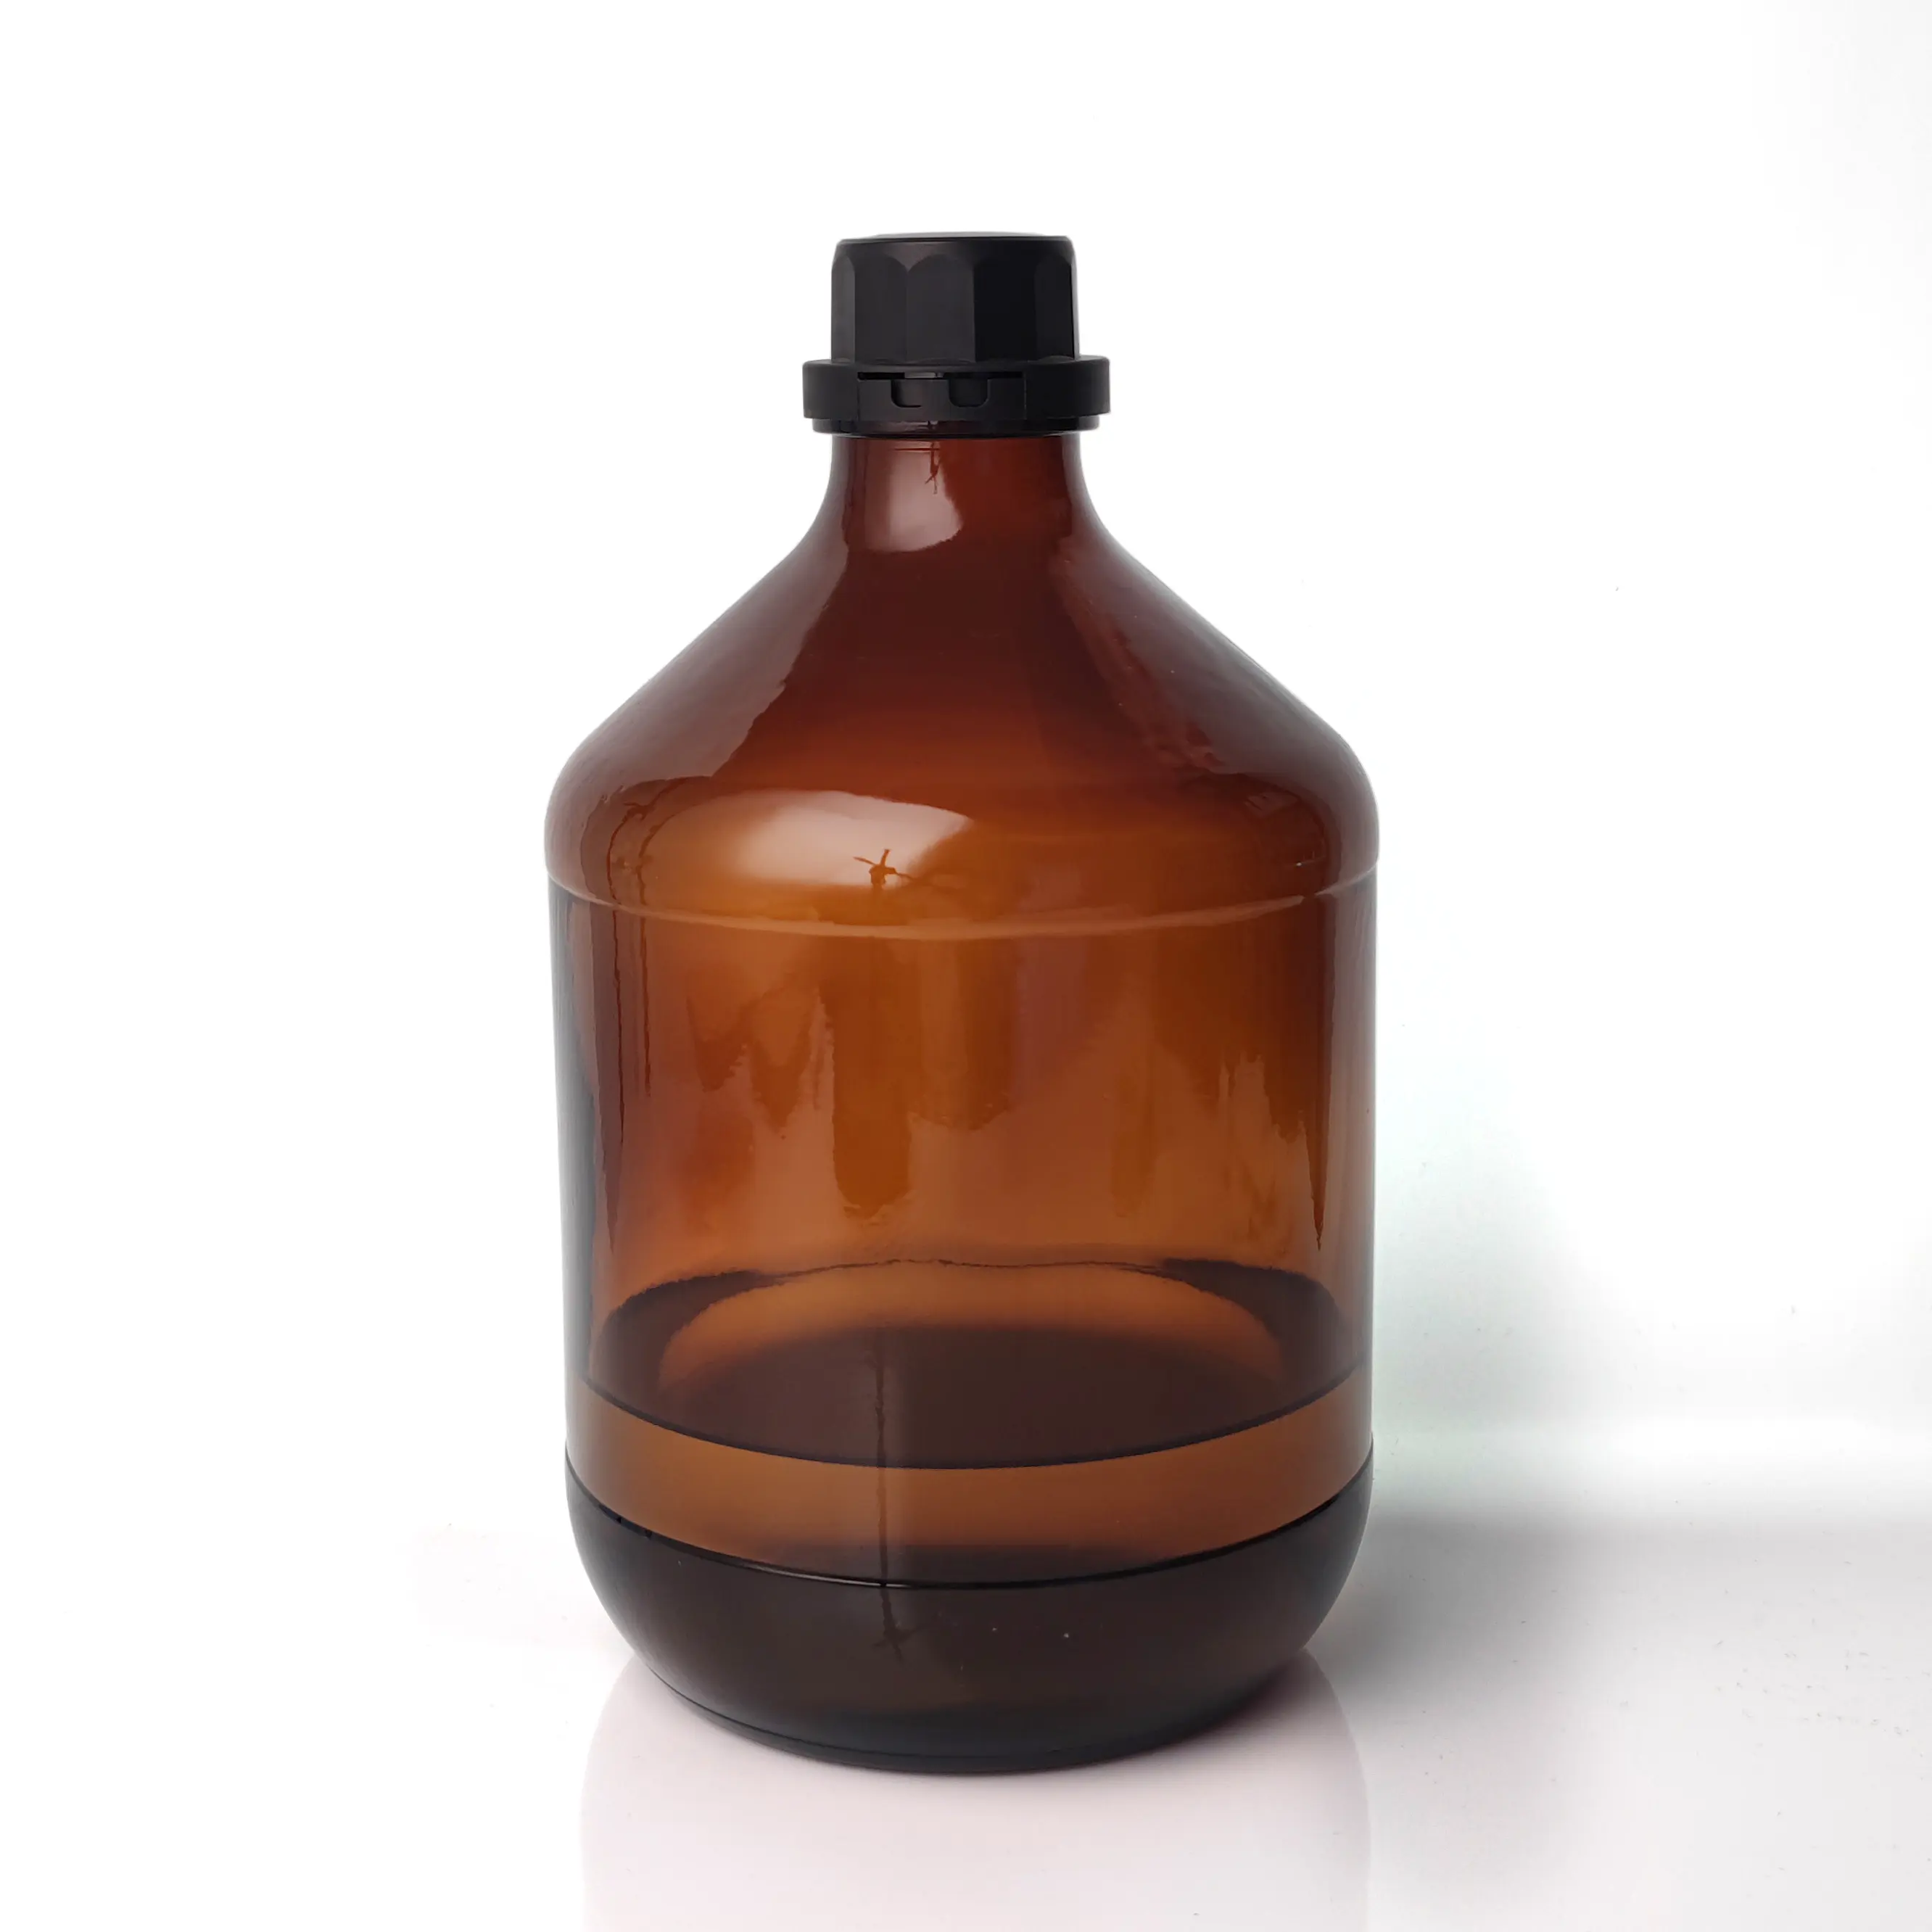 Garrafa de vidro de ambarino marrom para reagente químico farmacêutico de 2,5L por atacado garrafa tipo curta de 2,5L